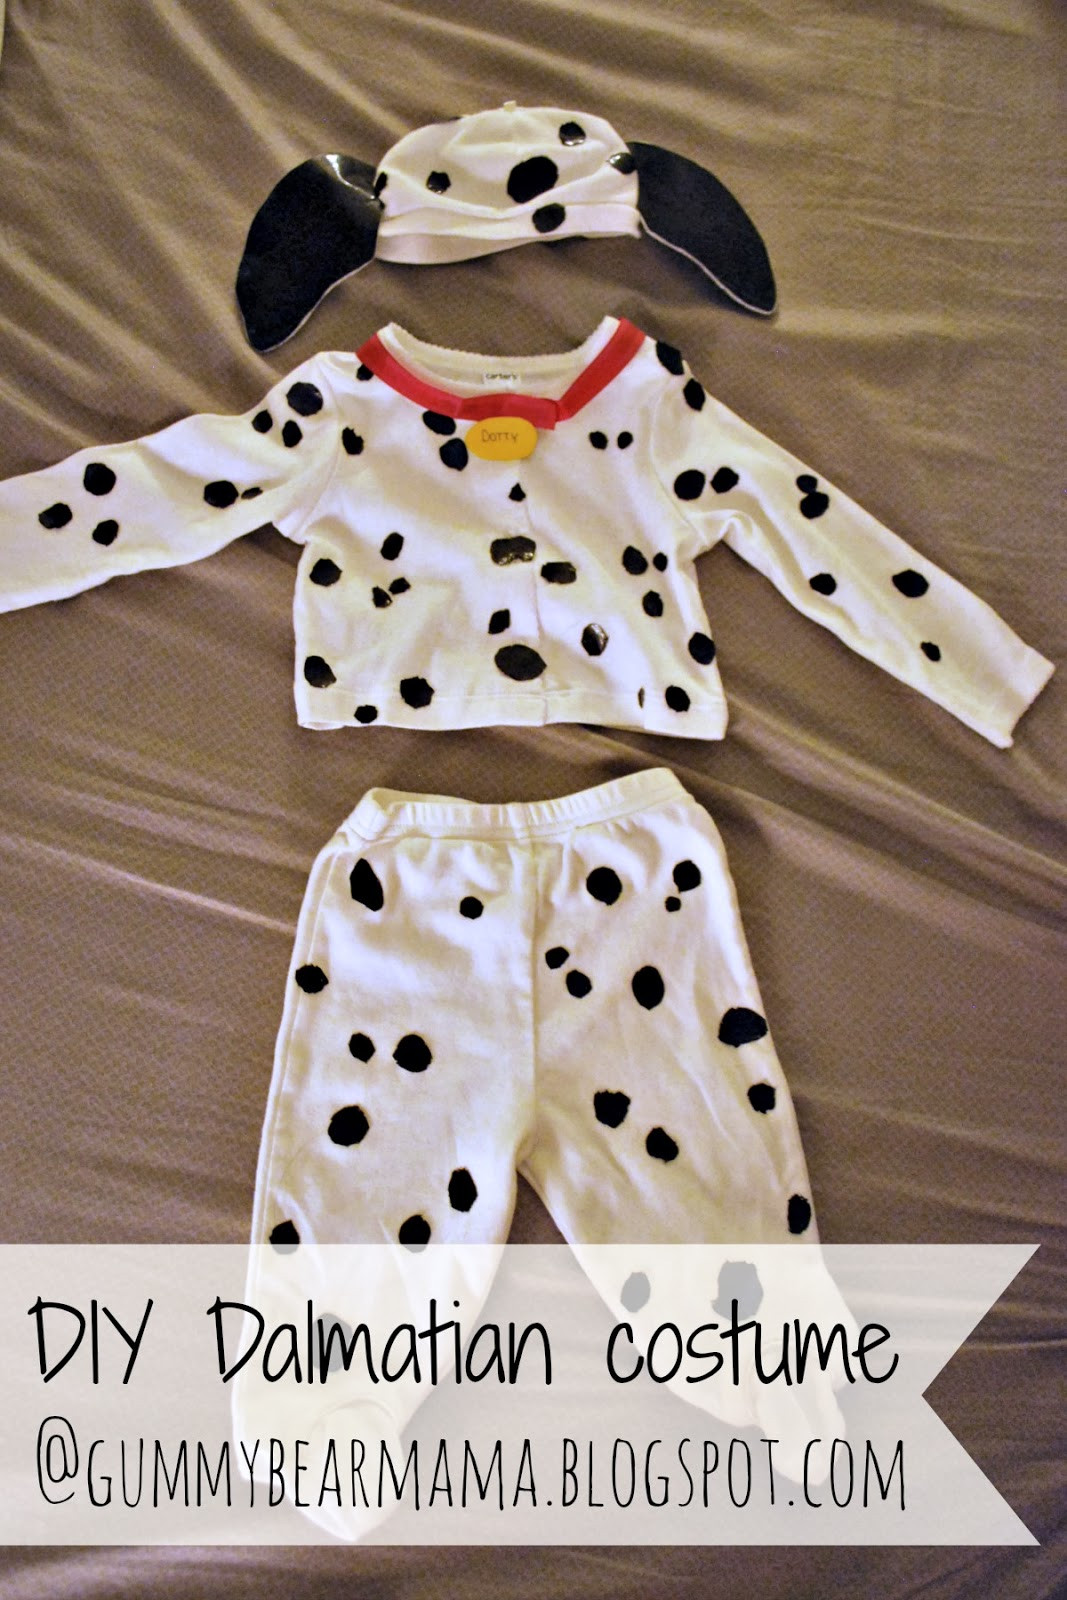 Best ideas about DIY Dalmatian Costume
. Save or Pin gummy bear mama DIY Dalmatian Costume Now.